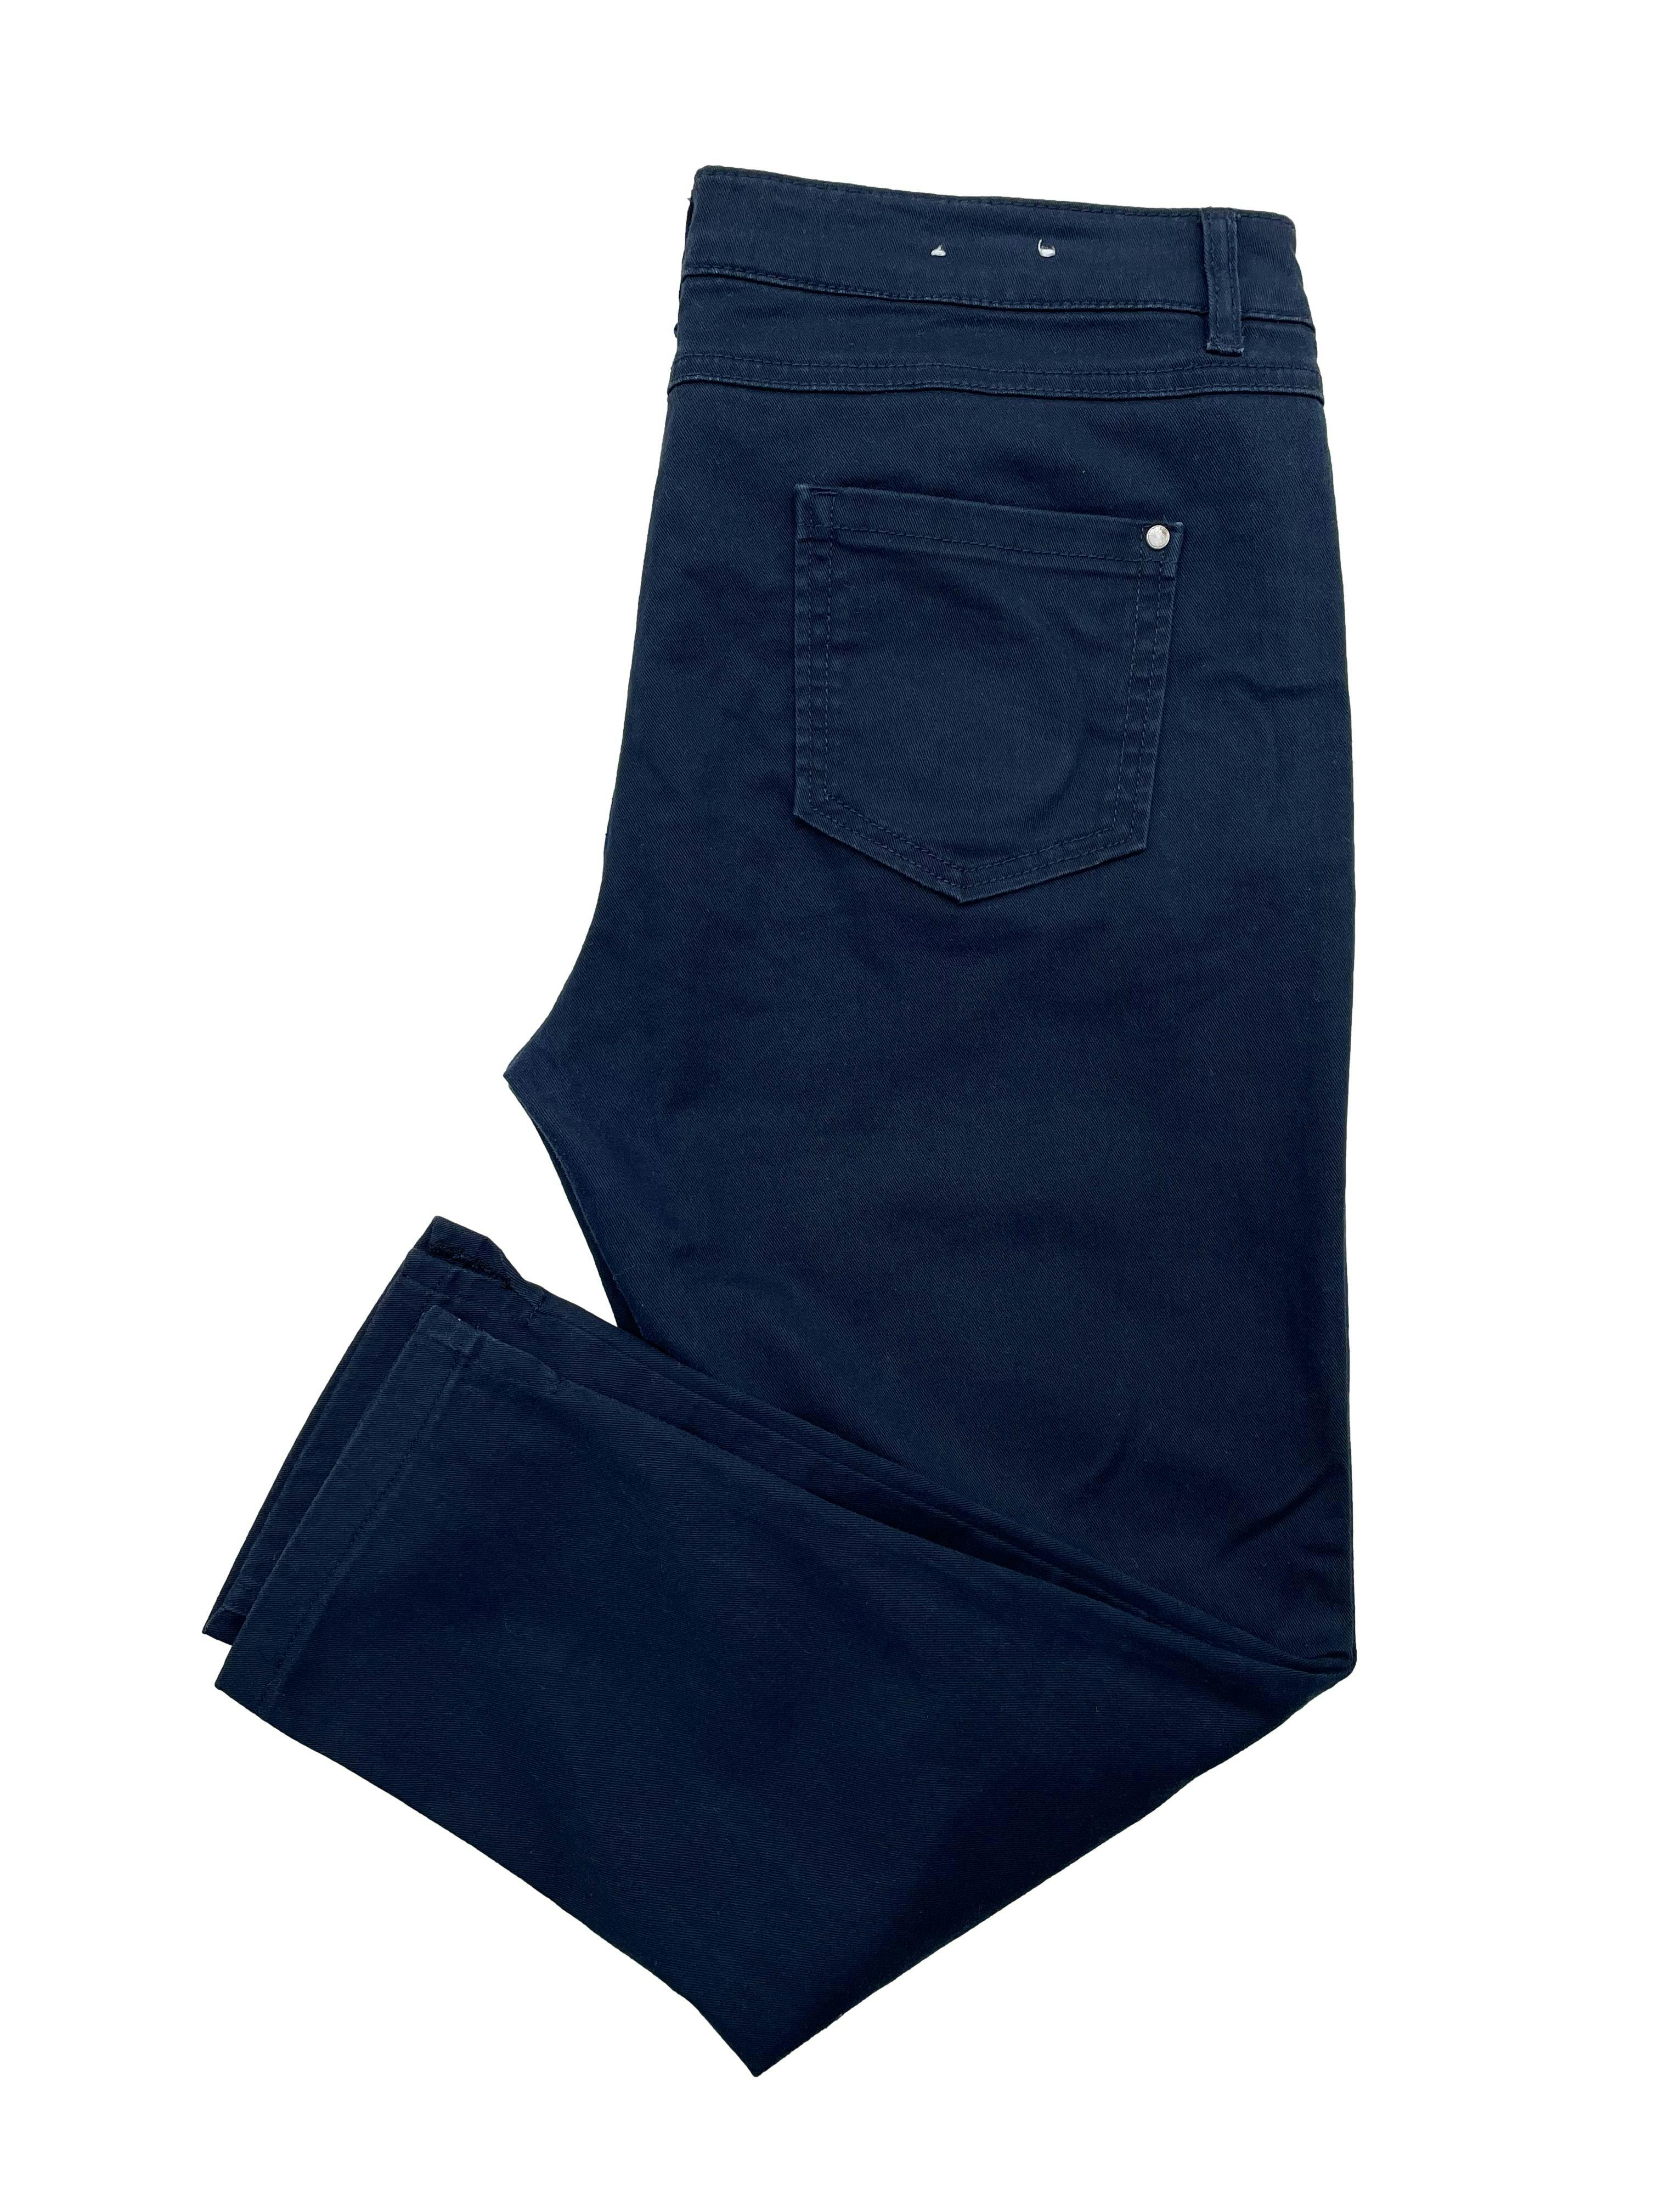 Pantalón Sfera drill azul marino, corte recto, five pockets y aberturas laterales. Cintura 90cm, Tiro 25cm, Largo 84cm.